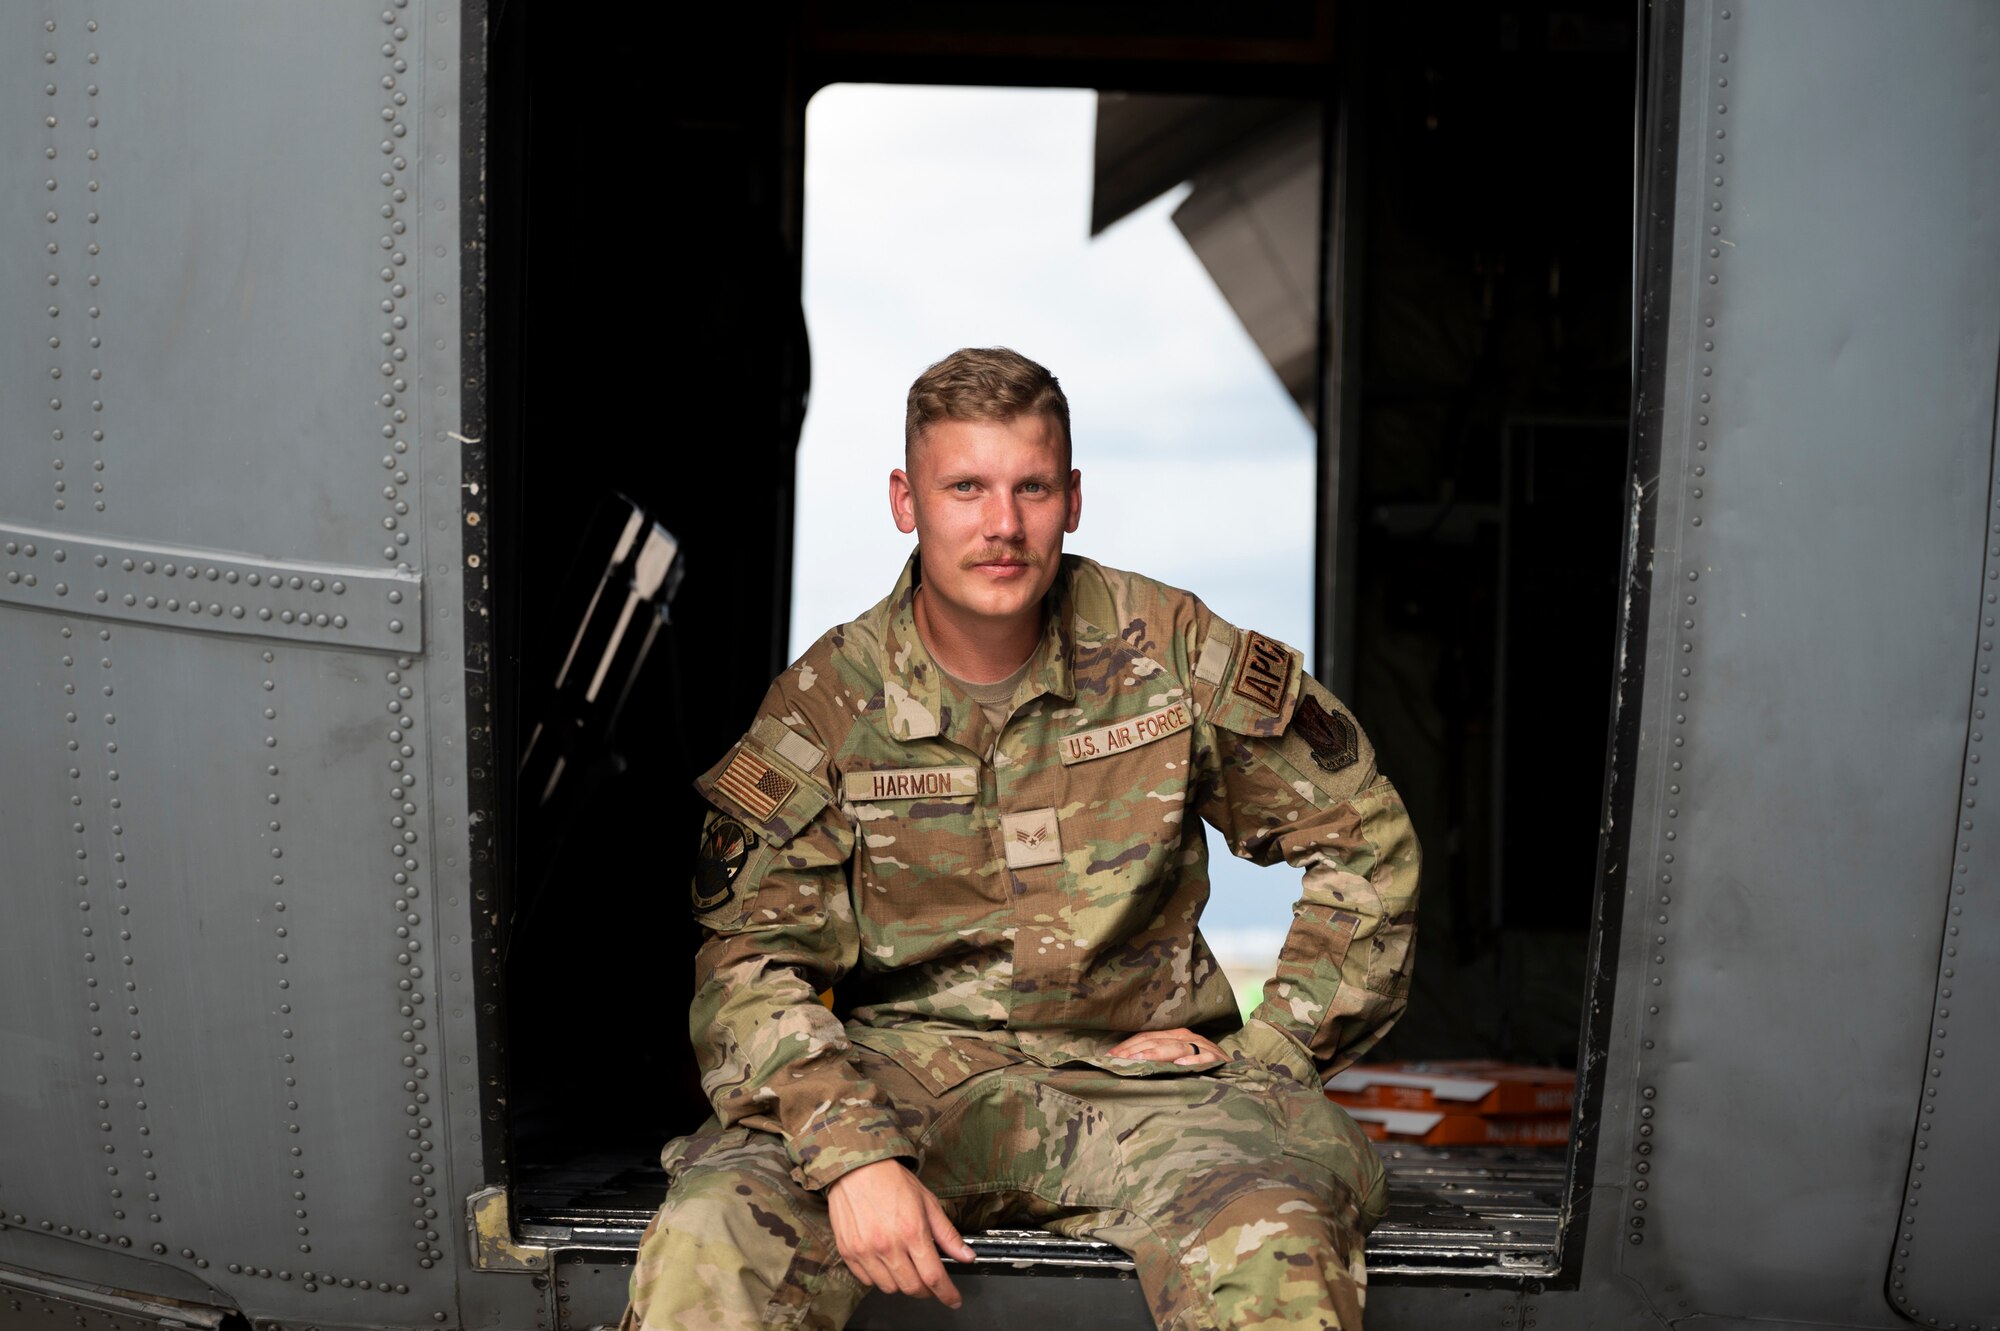 Photo of Senior Airman Harmon sitting inside the door of an EC-130H aircraft.